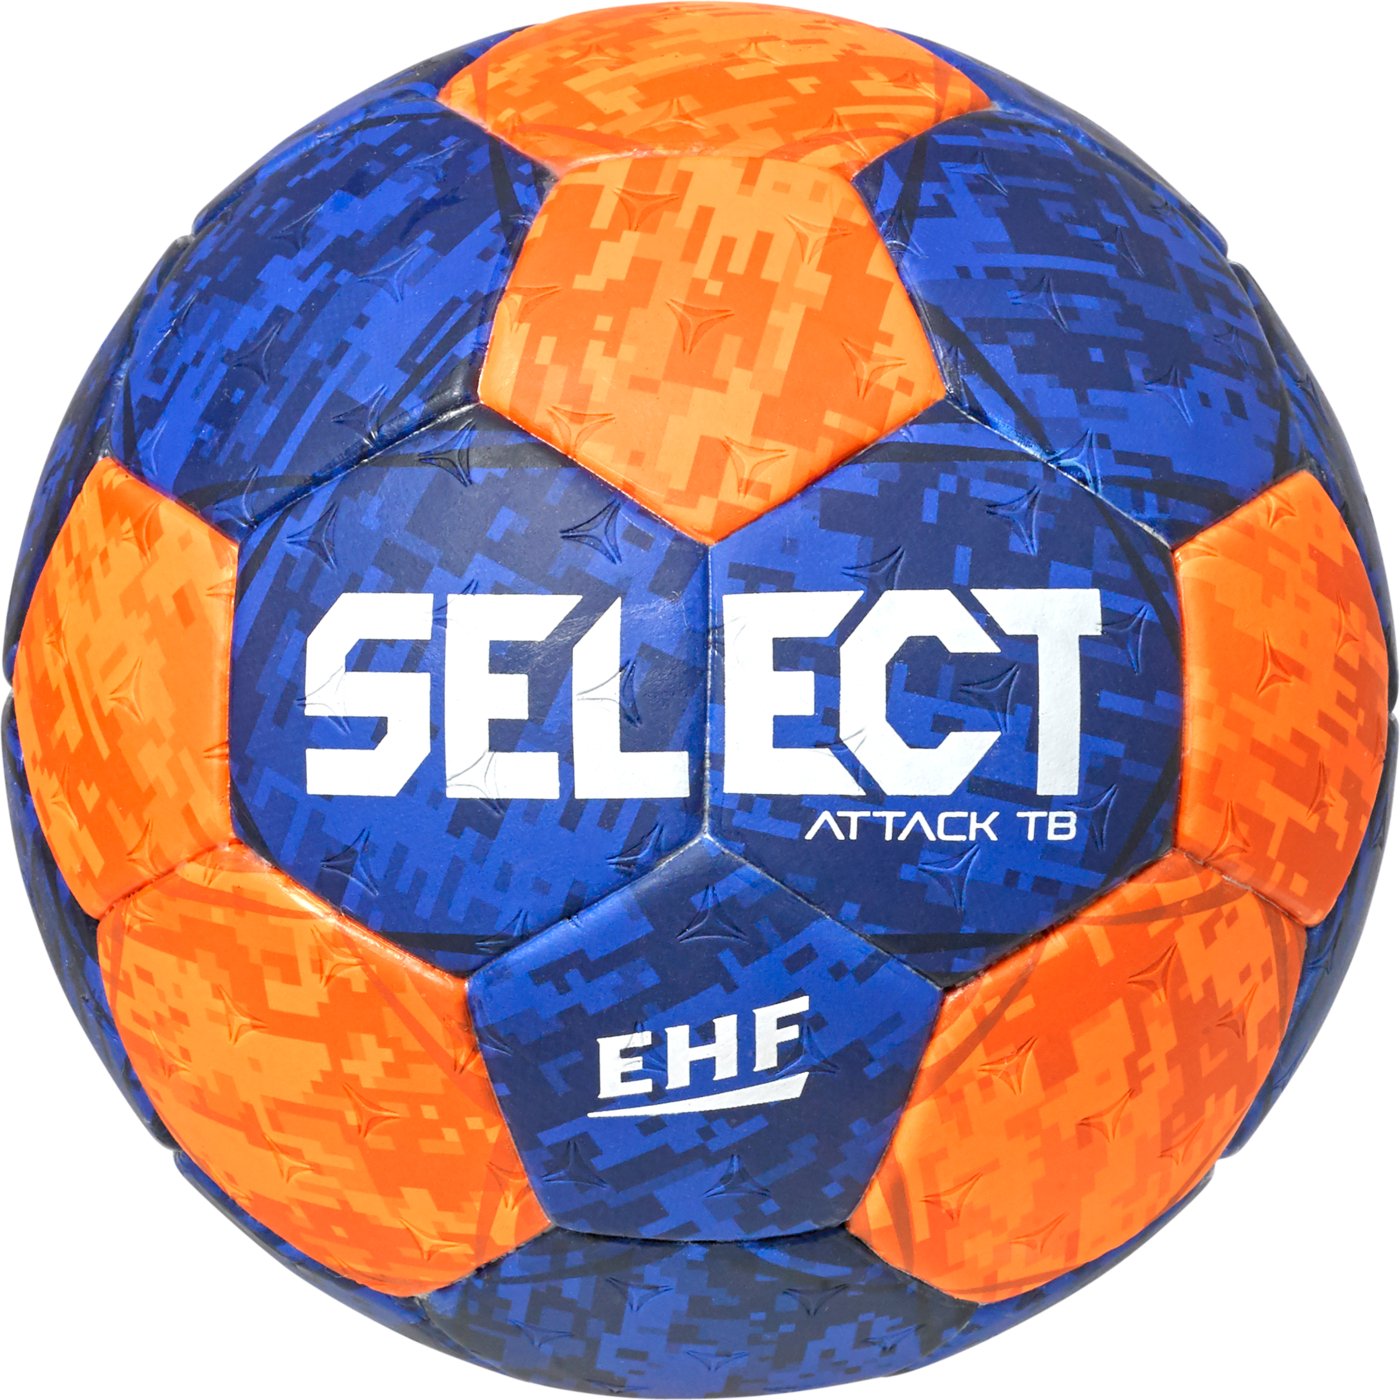 М'яч гандбольний SELECT Attack TB v22 (839) син/помаранчевий, lilleput (1), синій/помаранчевий, lilleput 1